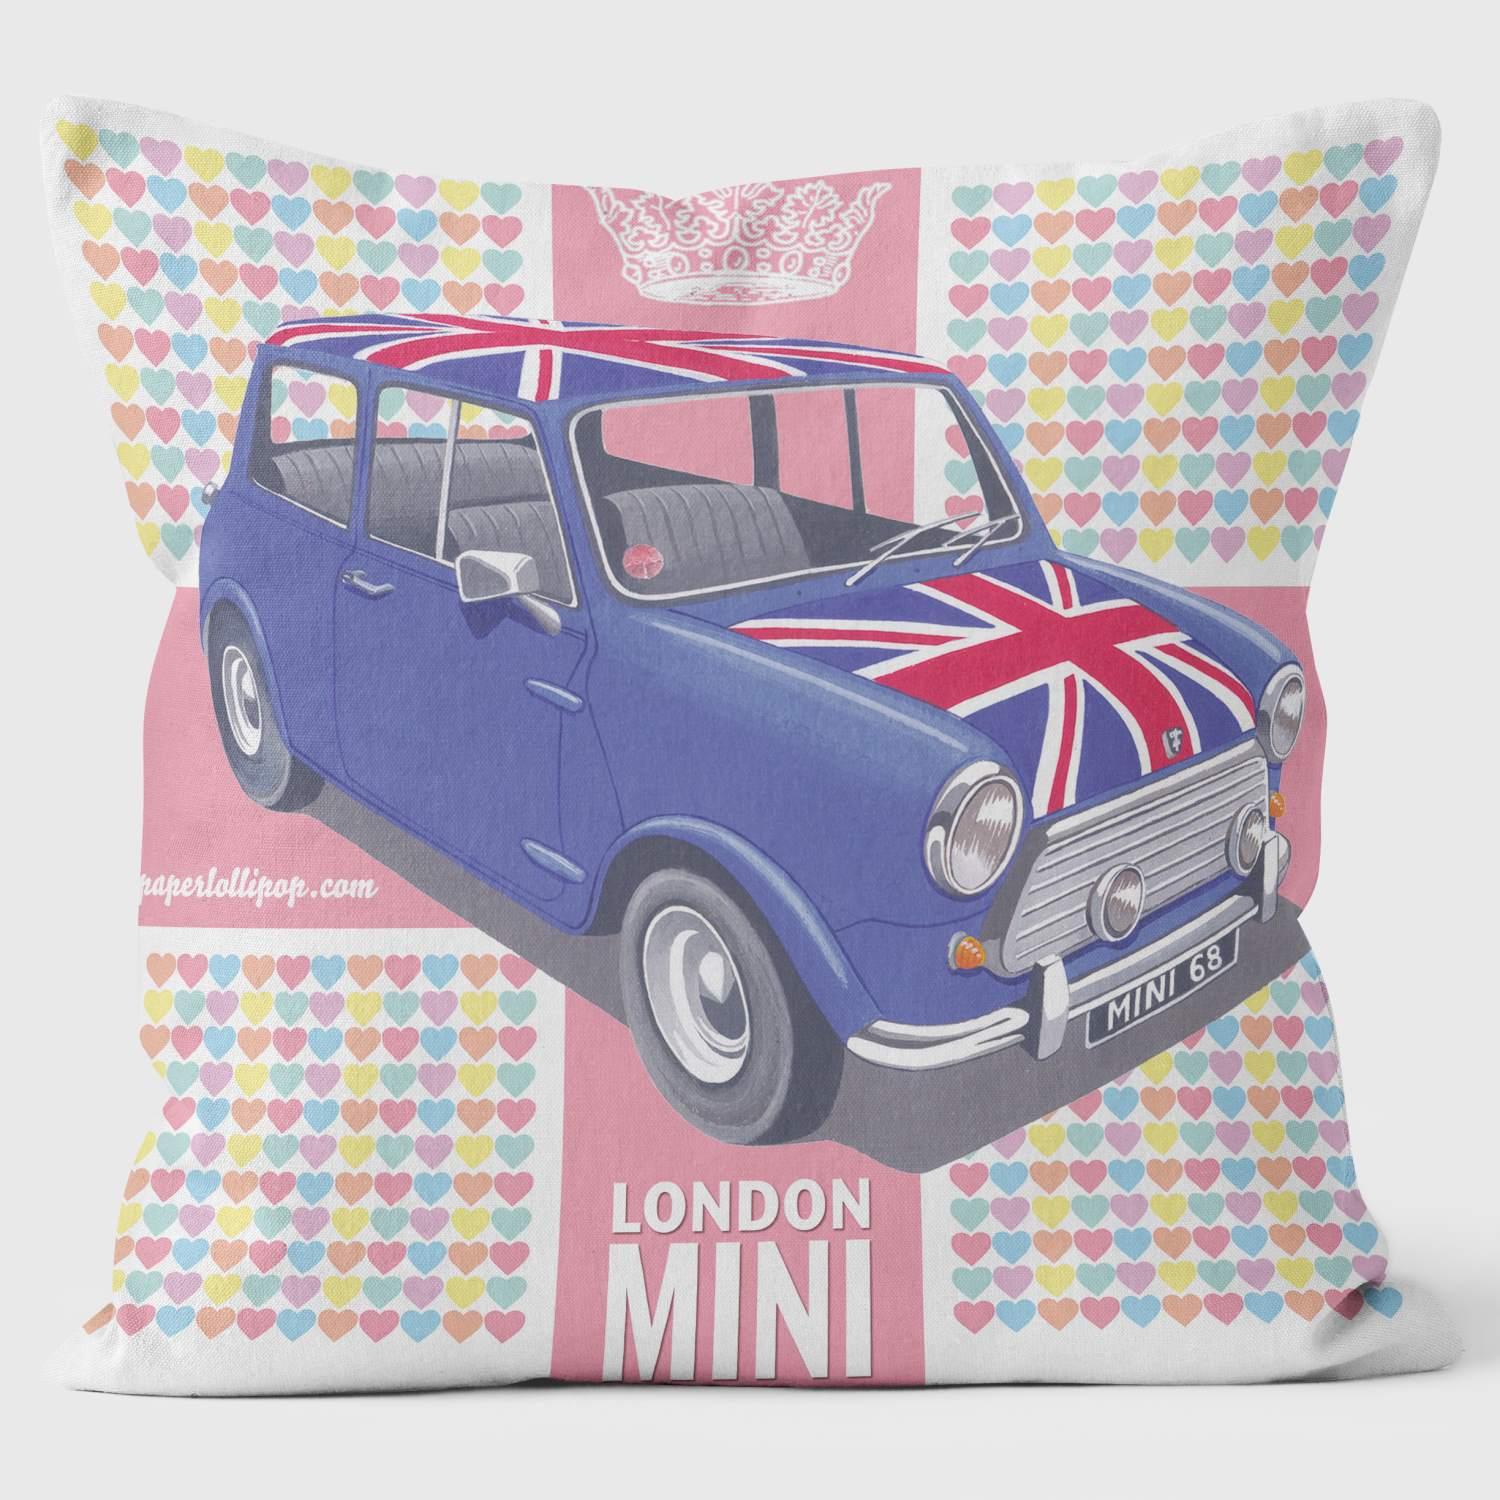 London Mini Cushion - Paperlollipop Cushion - Handmade Cushions UK - WeLoveCushions